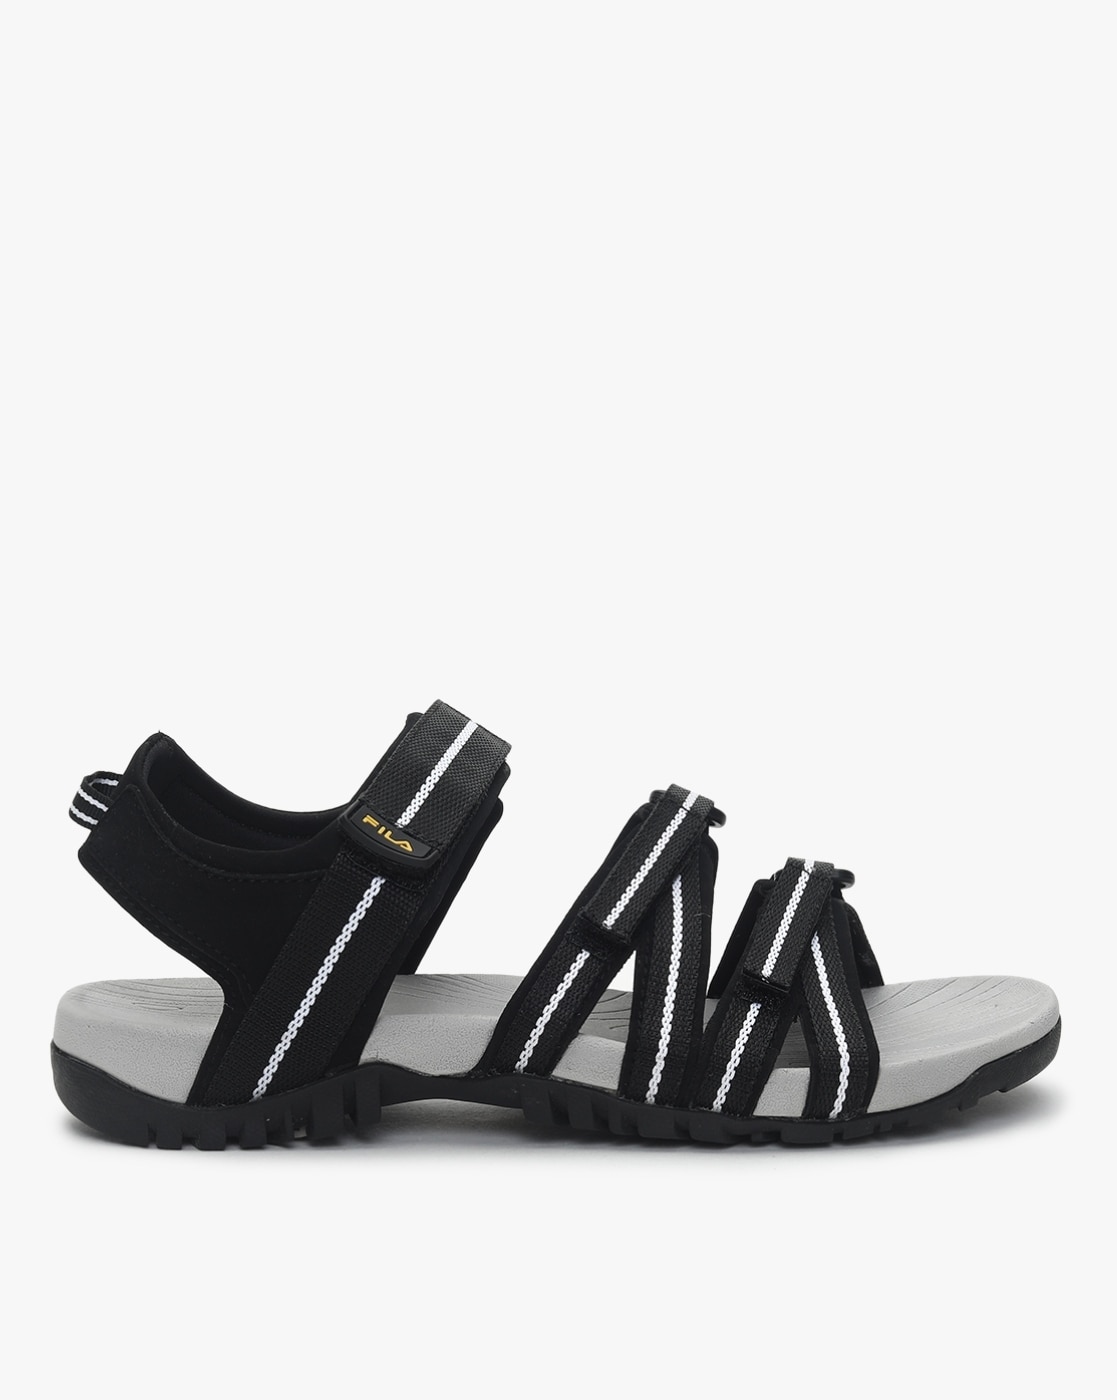 Fila Morro Bay Slipper Shoes Black | Dressinn